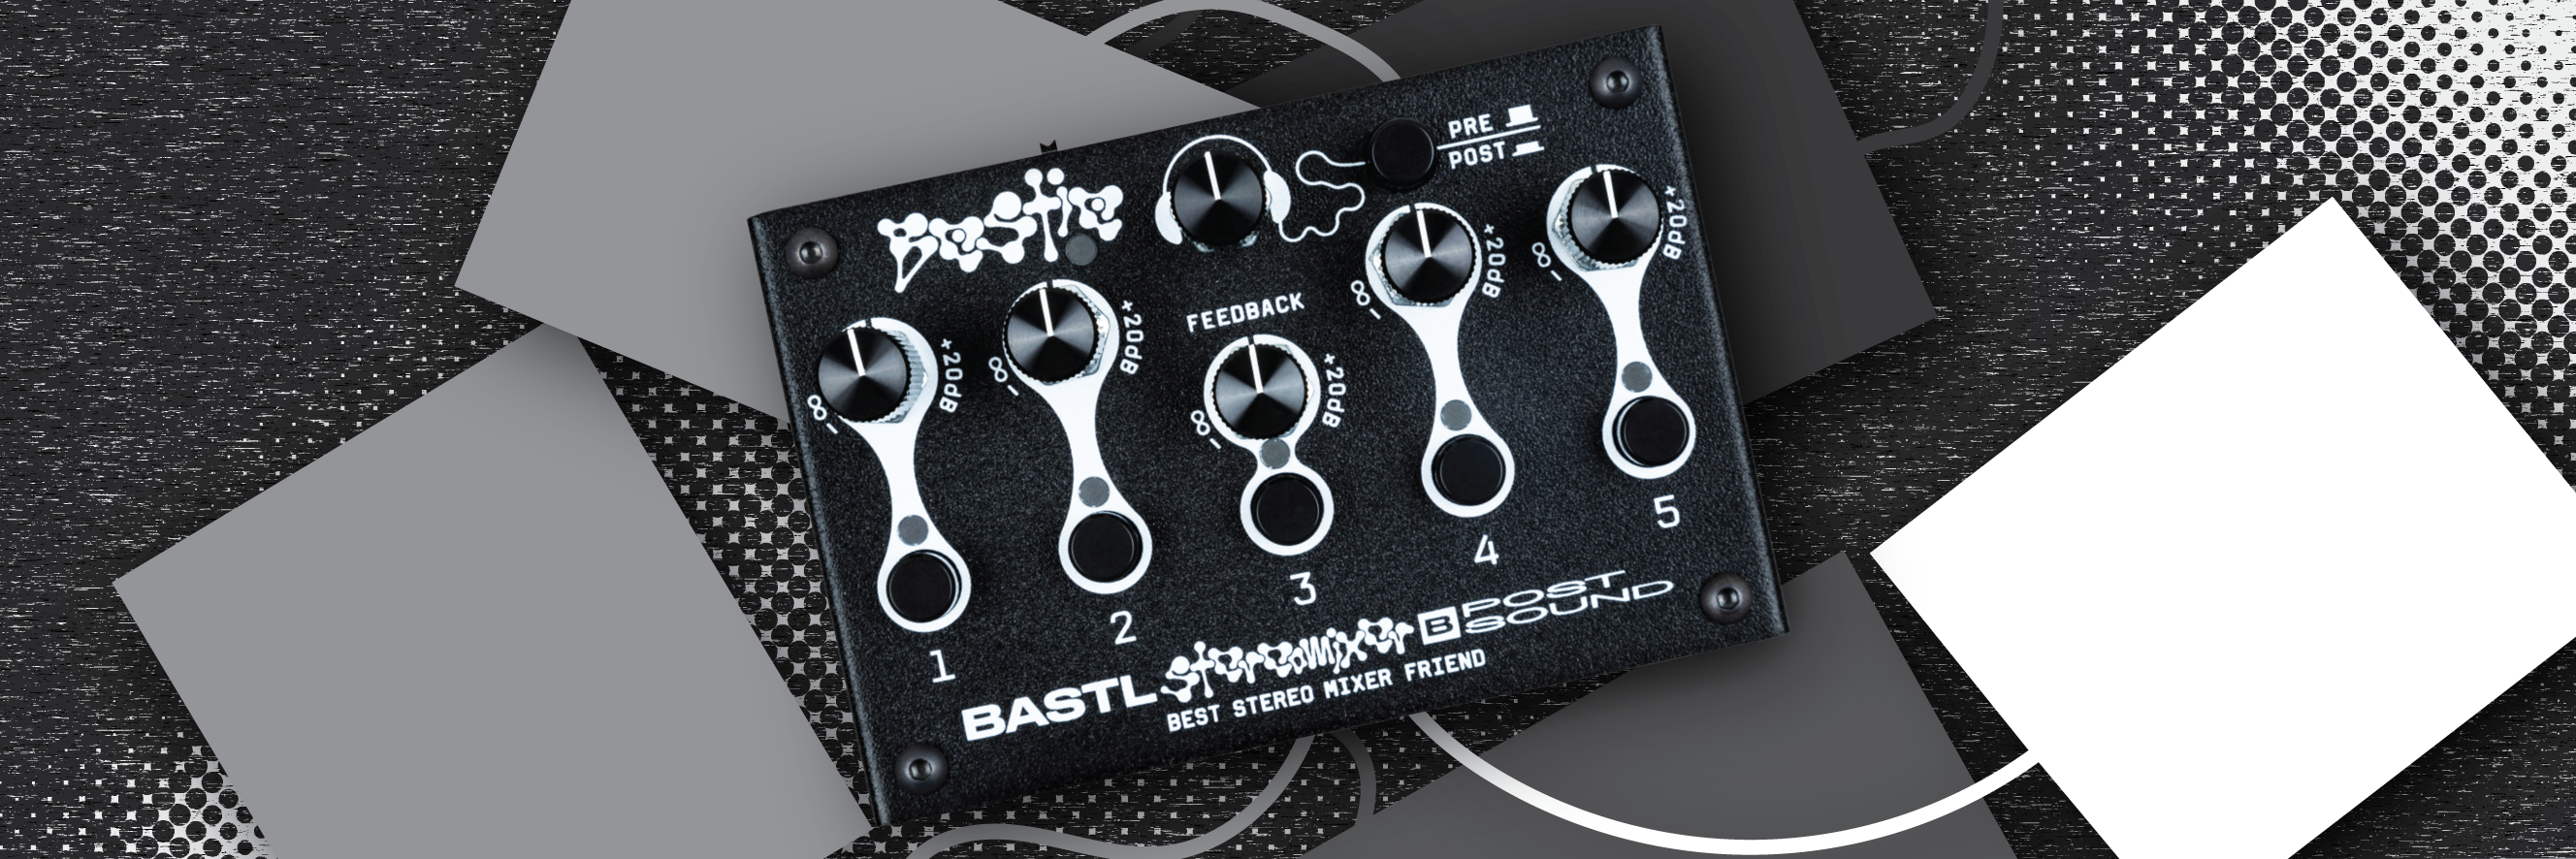 BASTL Instruments BESTIE Stereo Mixer